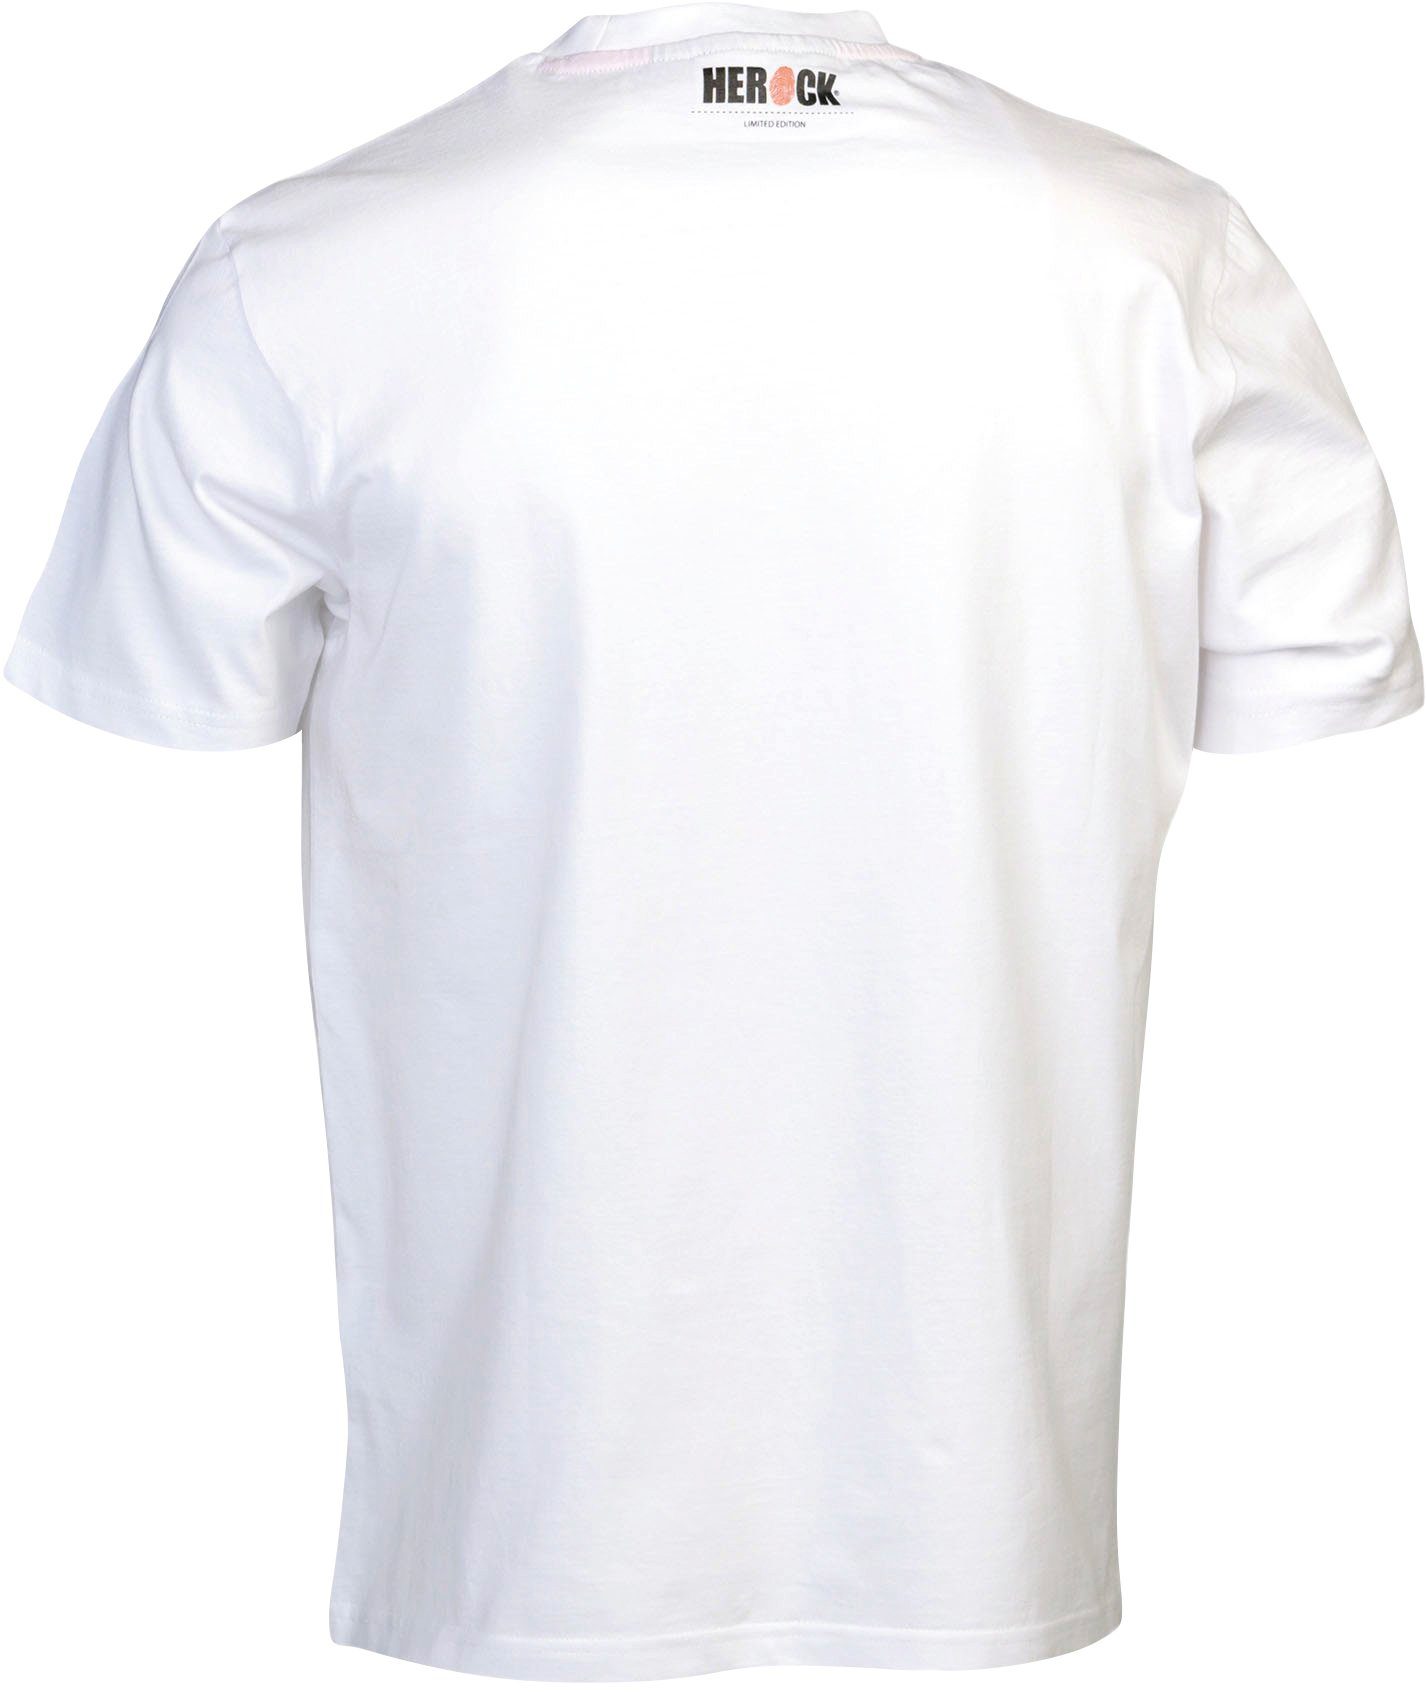 Mit Herock Herock®-Aufdruck Burst Ärmeln, kurzen Rundhalsausschnitt, T-Shirt